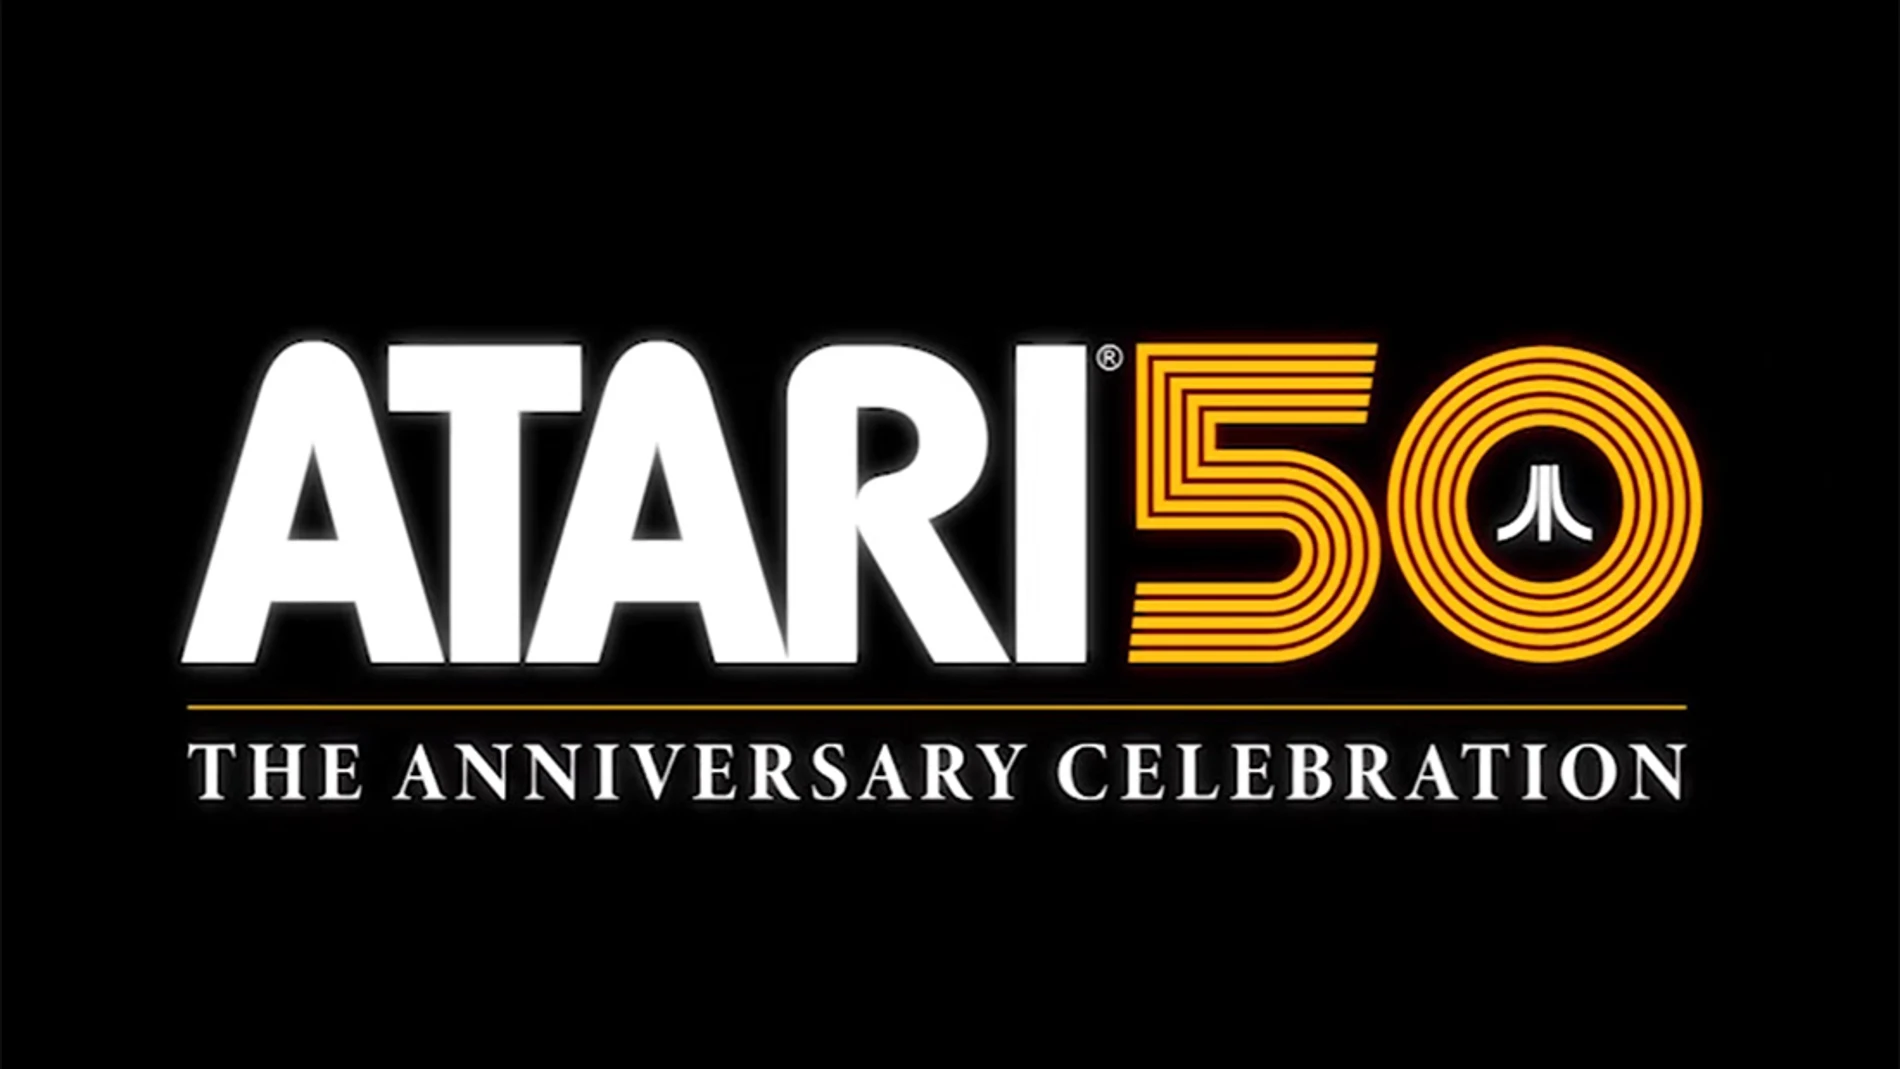 "Atari 50: The Anniversary Celebration" llega a finales de año.